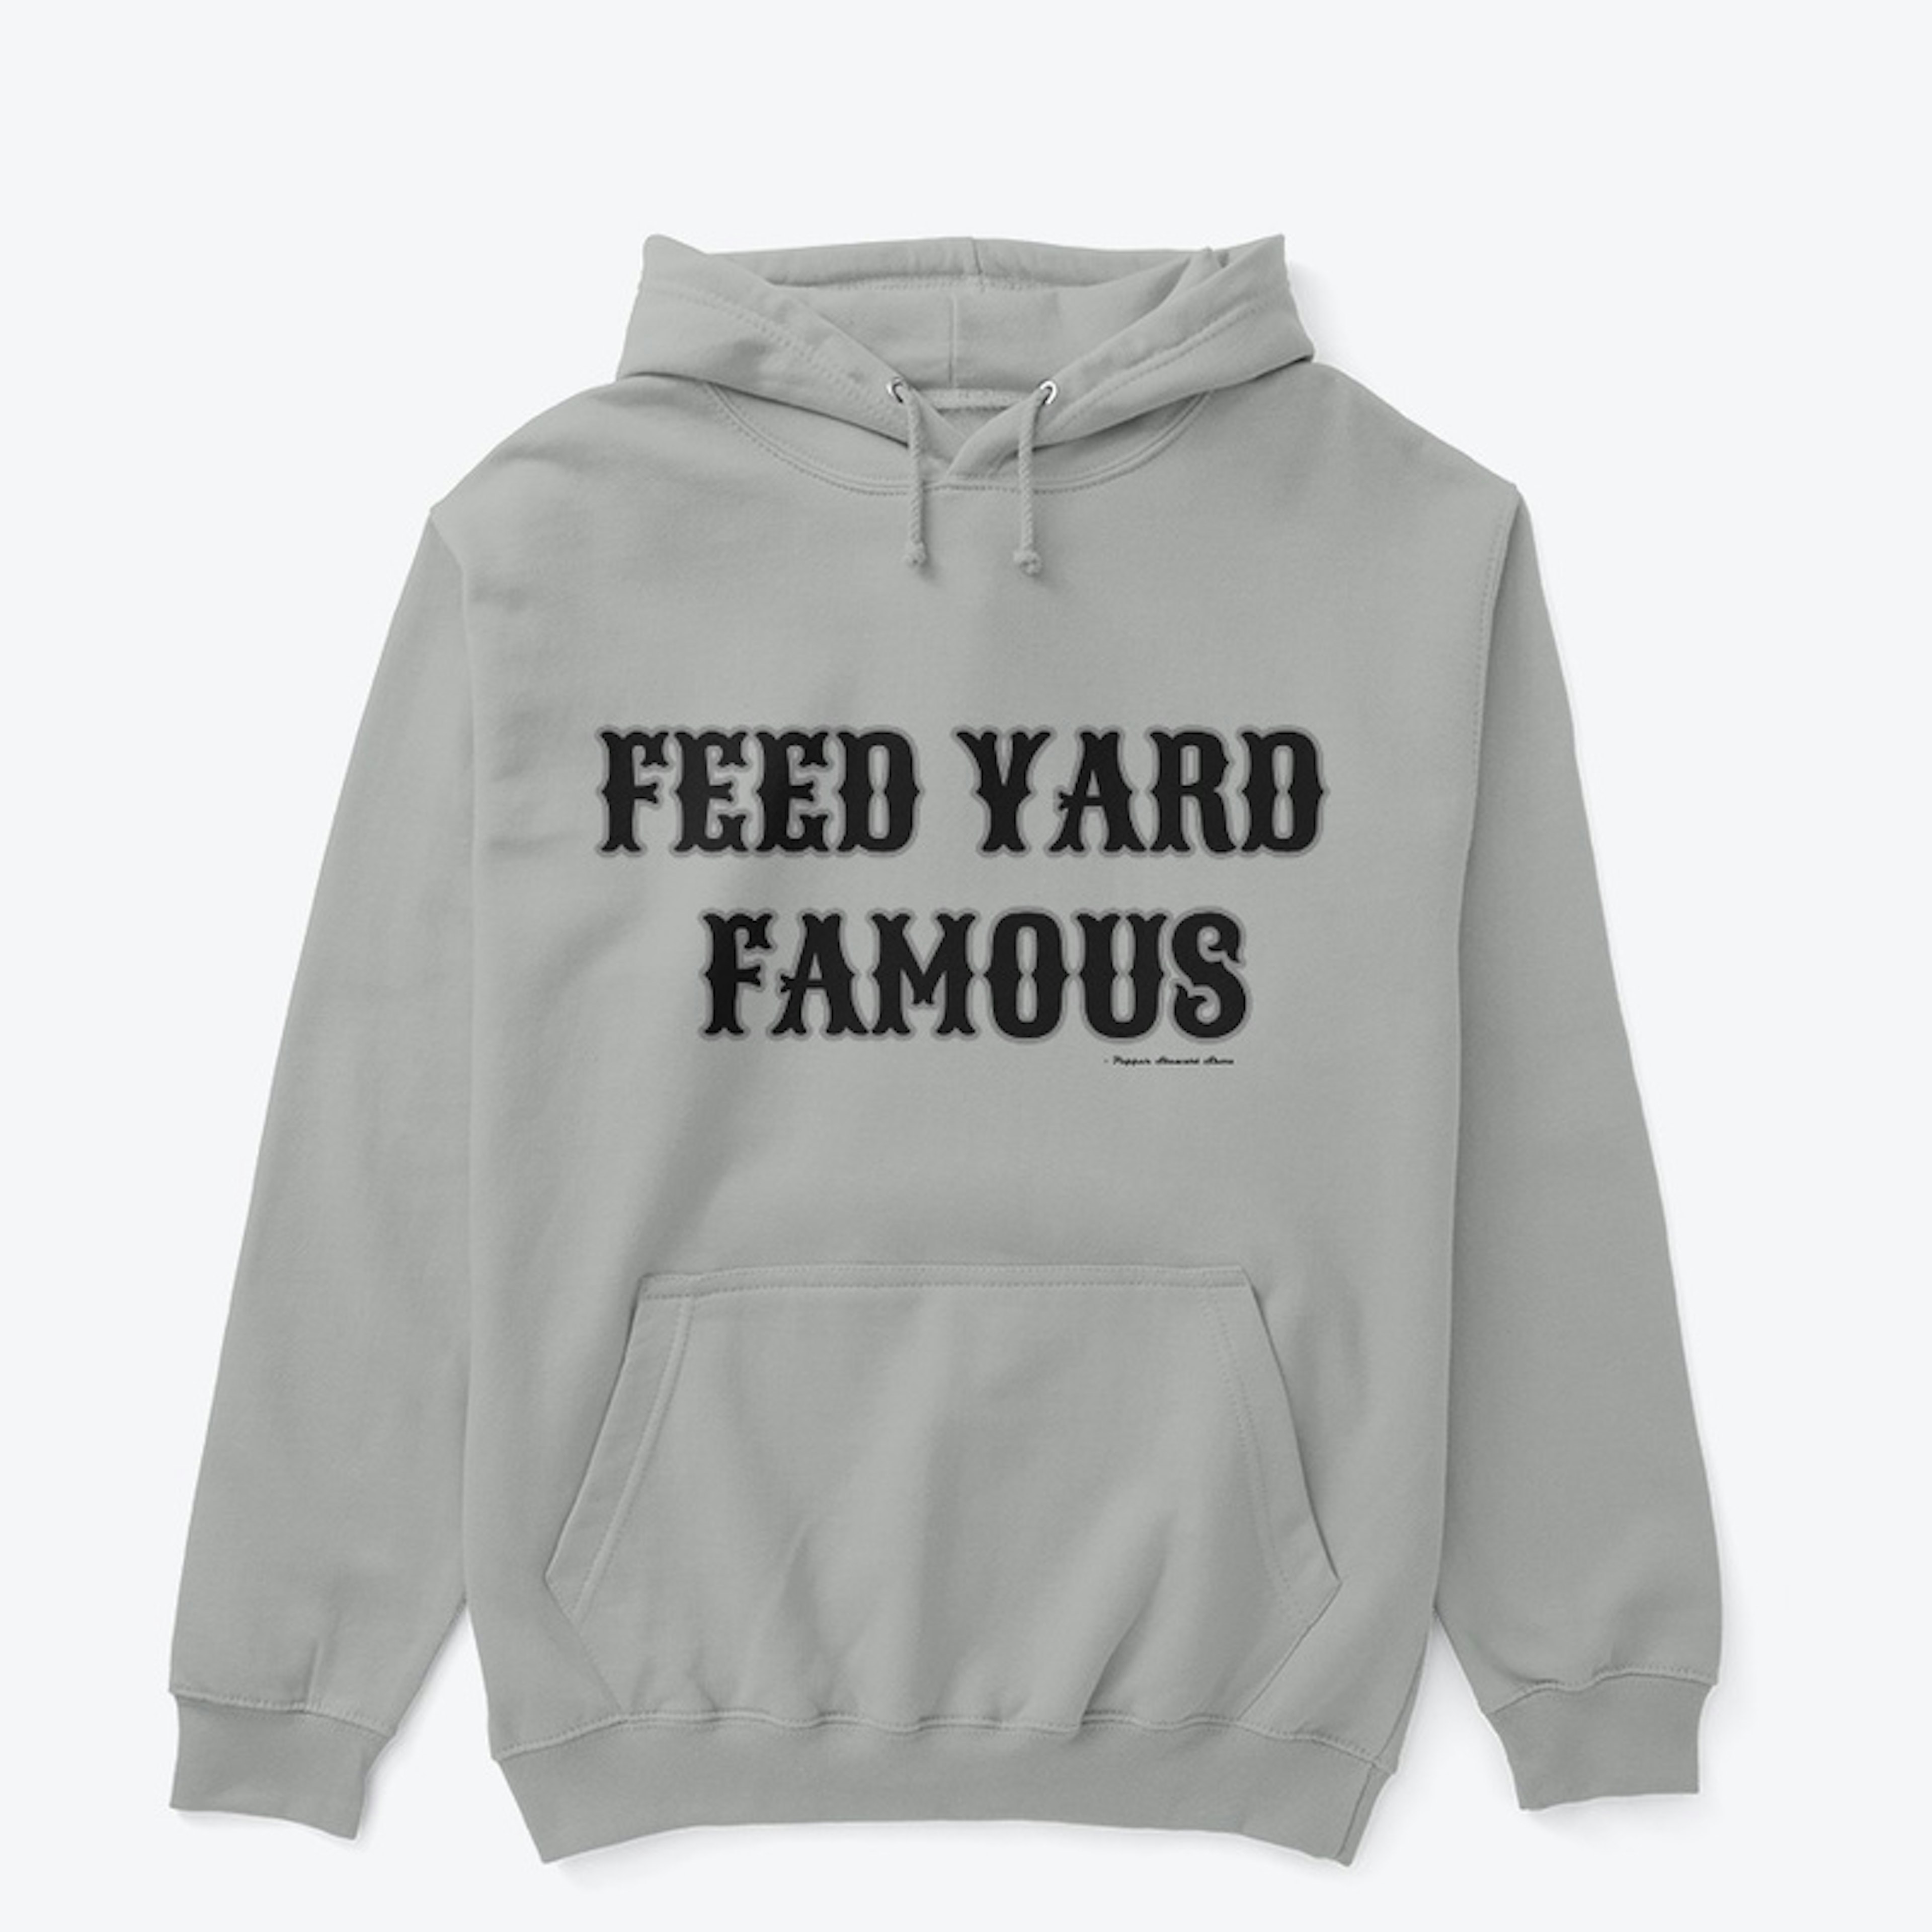 Feed Yard Fame Hoodie 